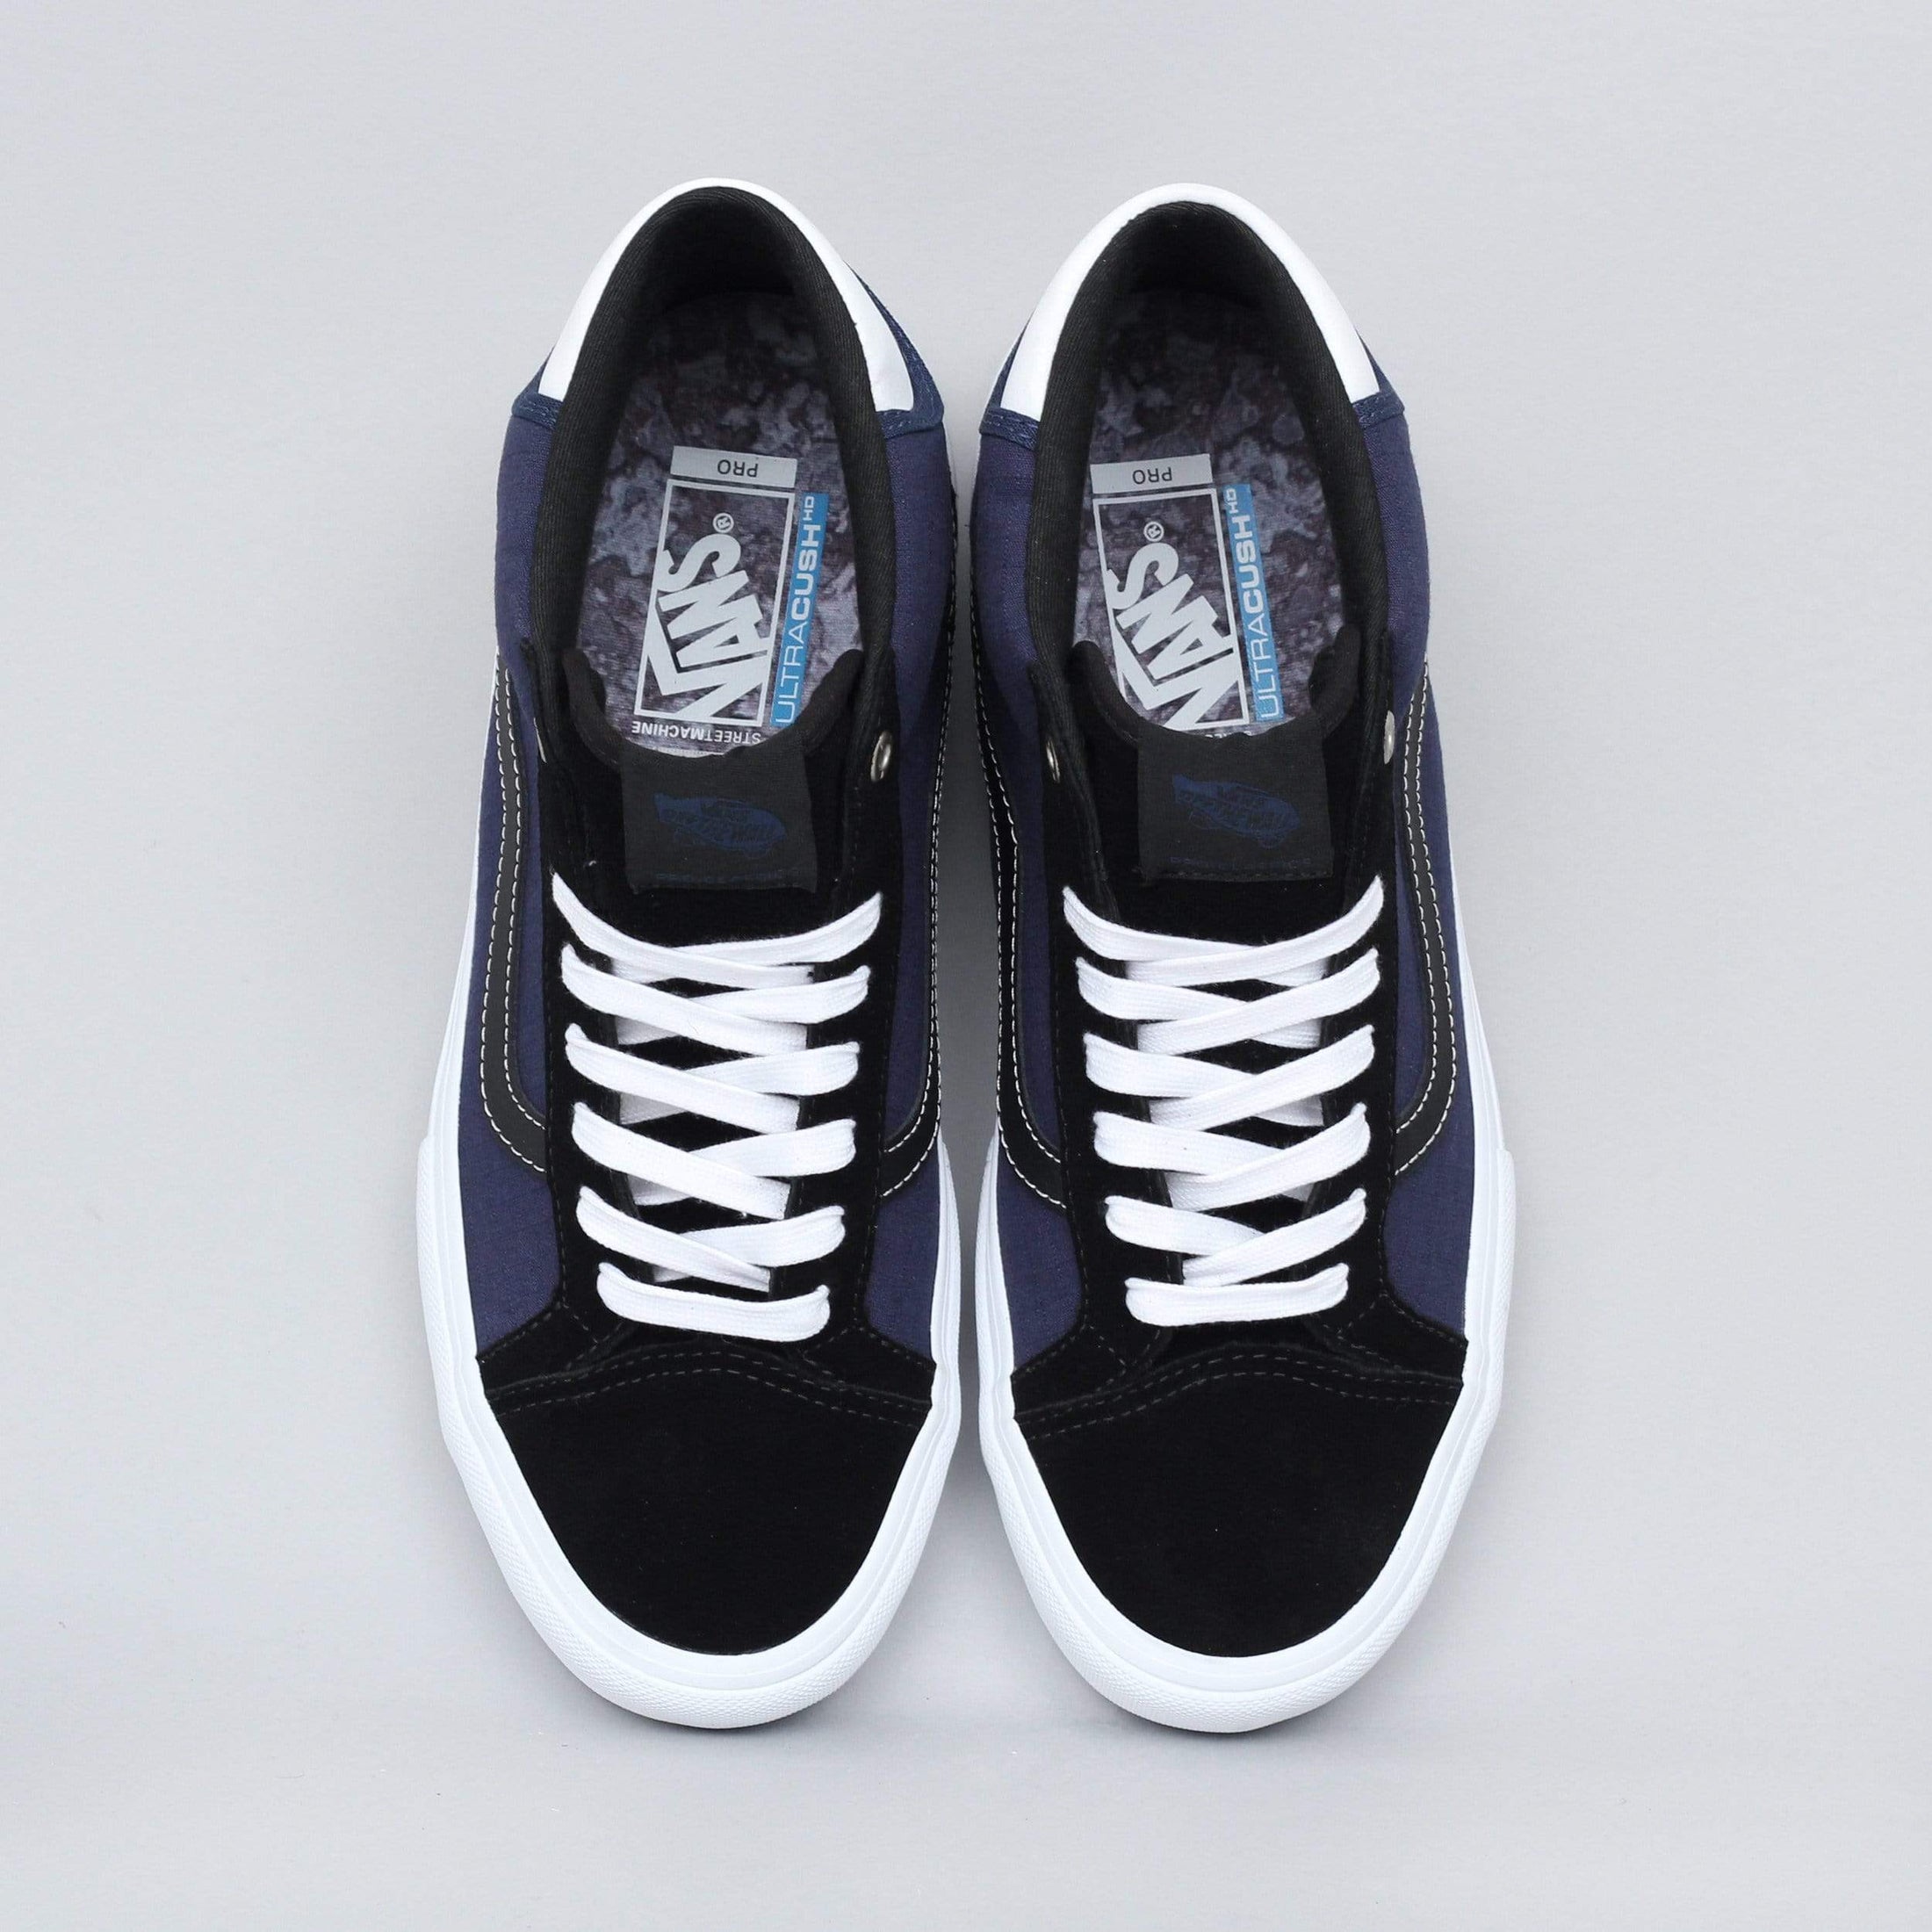 Vans Mid Skool Pro Shoes (Streetmachine) Black / Dark Blue / Traditional White